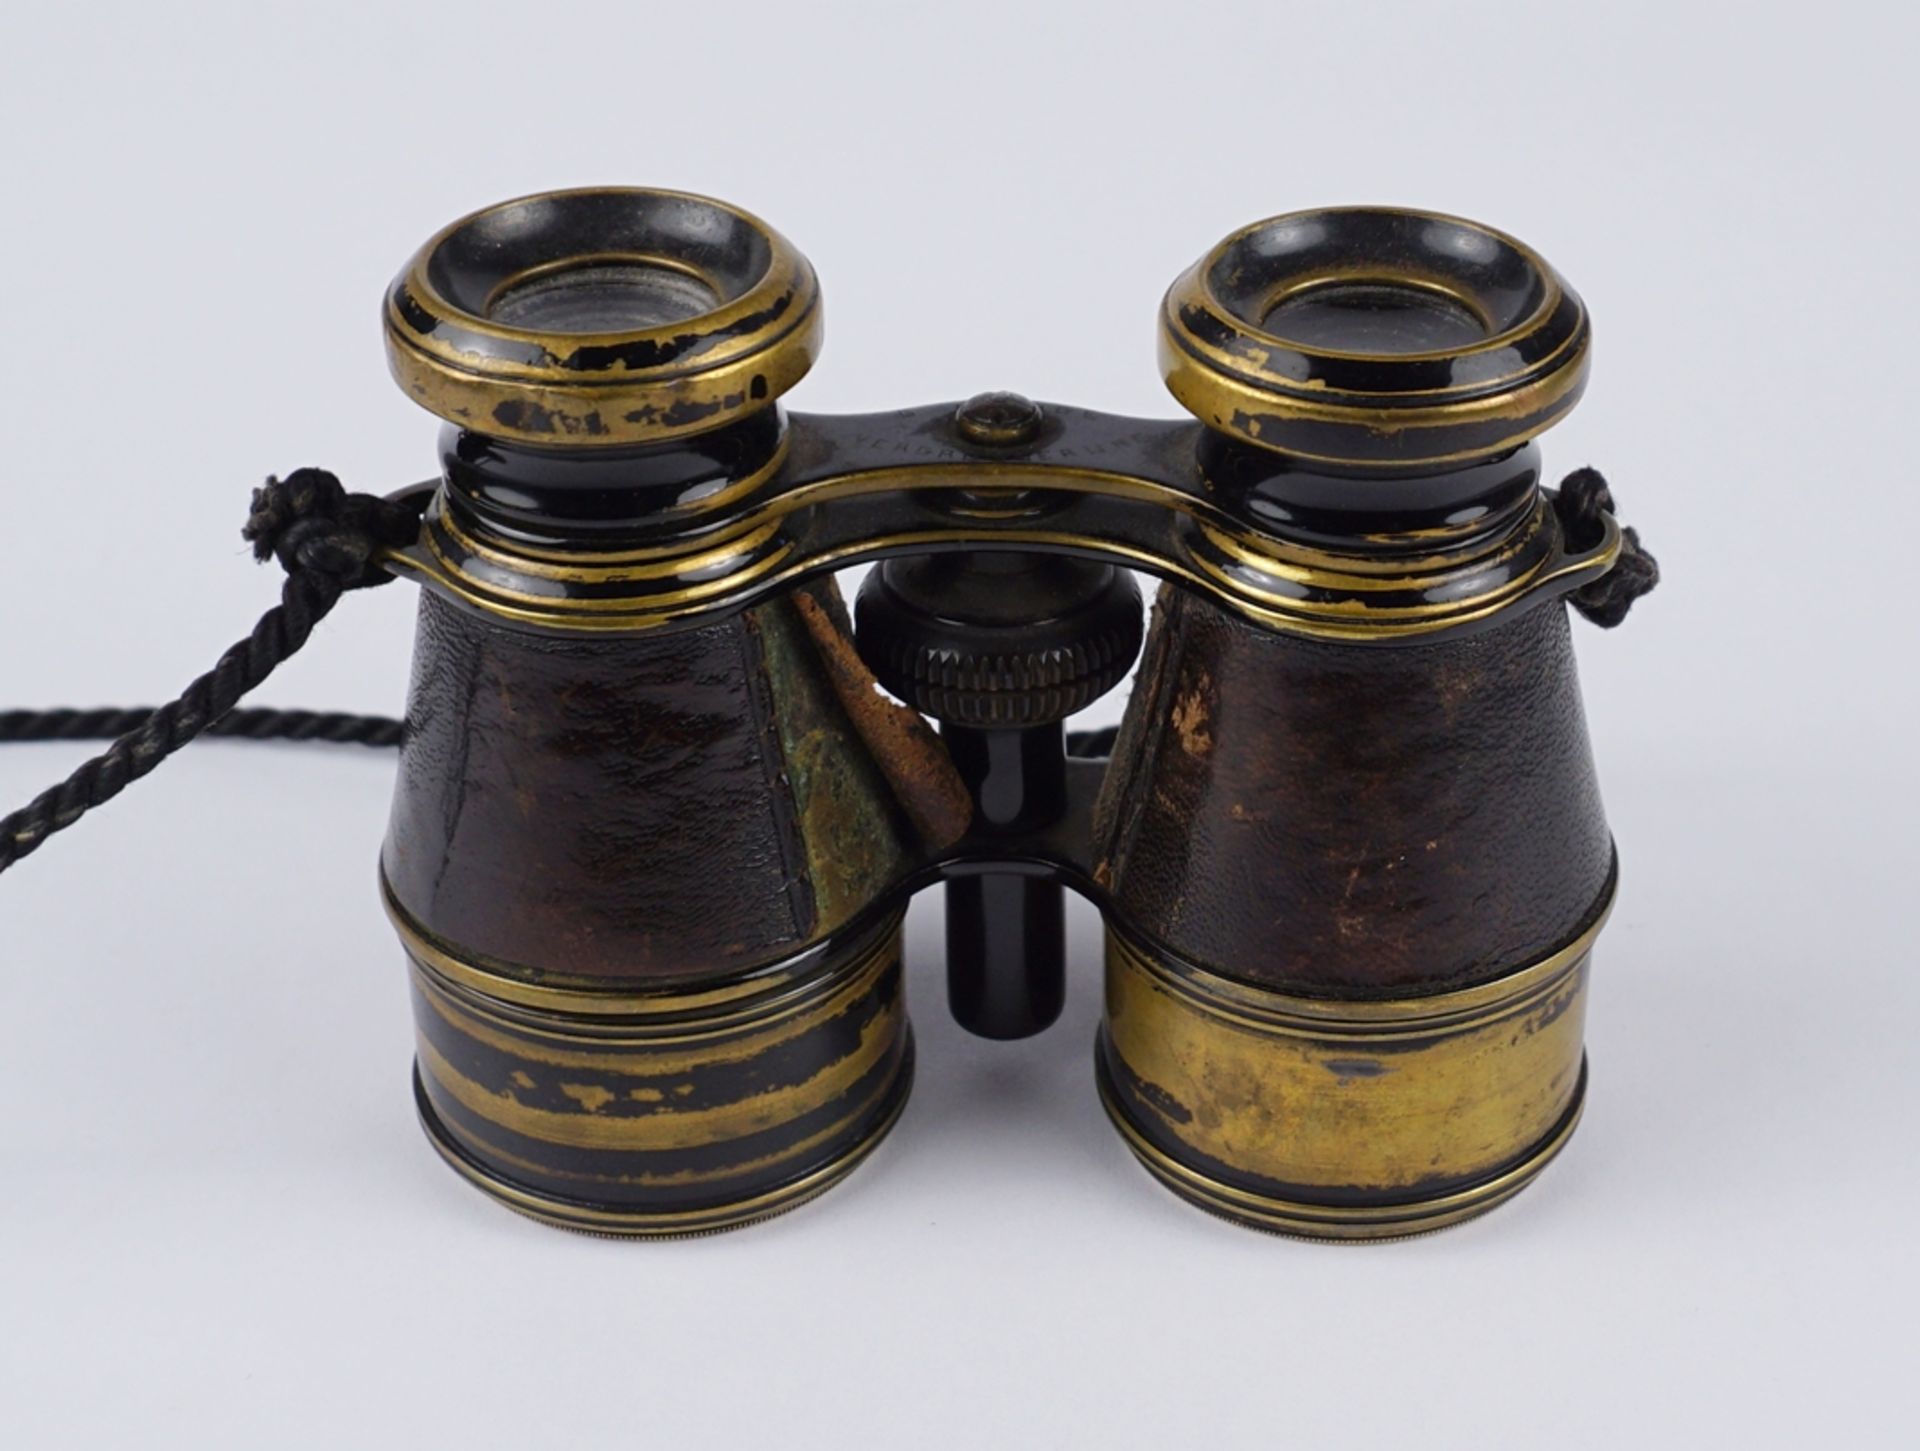 Fernglas, Messing, Lederummantelung, um 1900 - Bild 2 aus 2